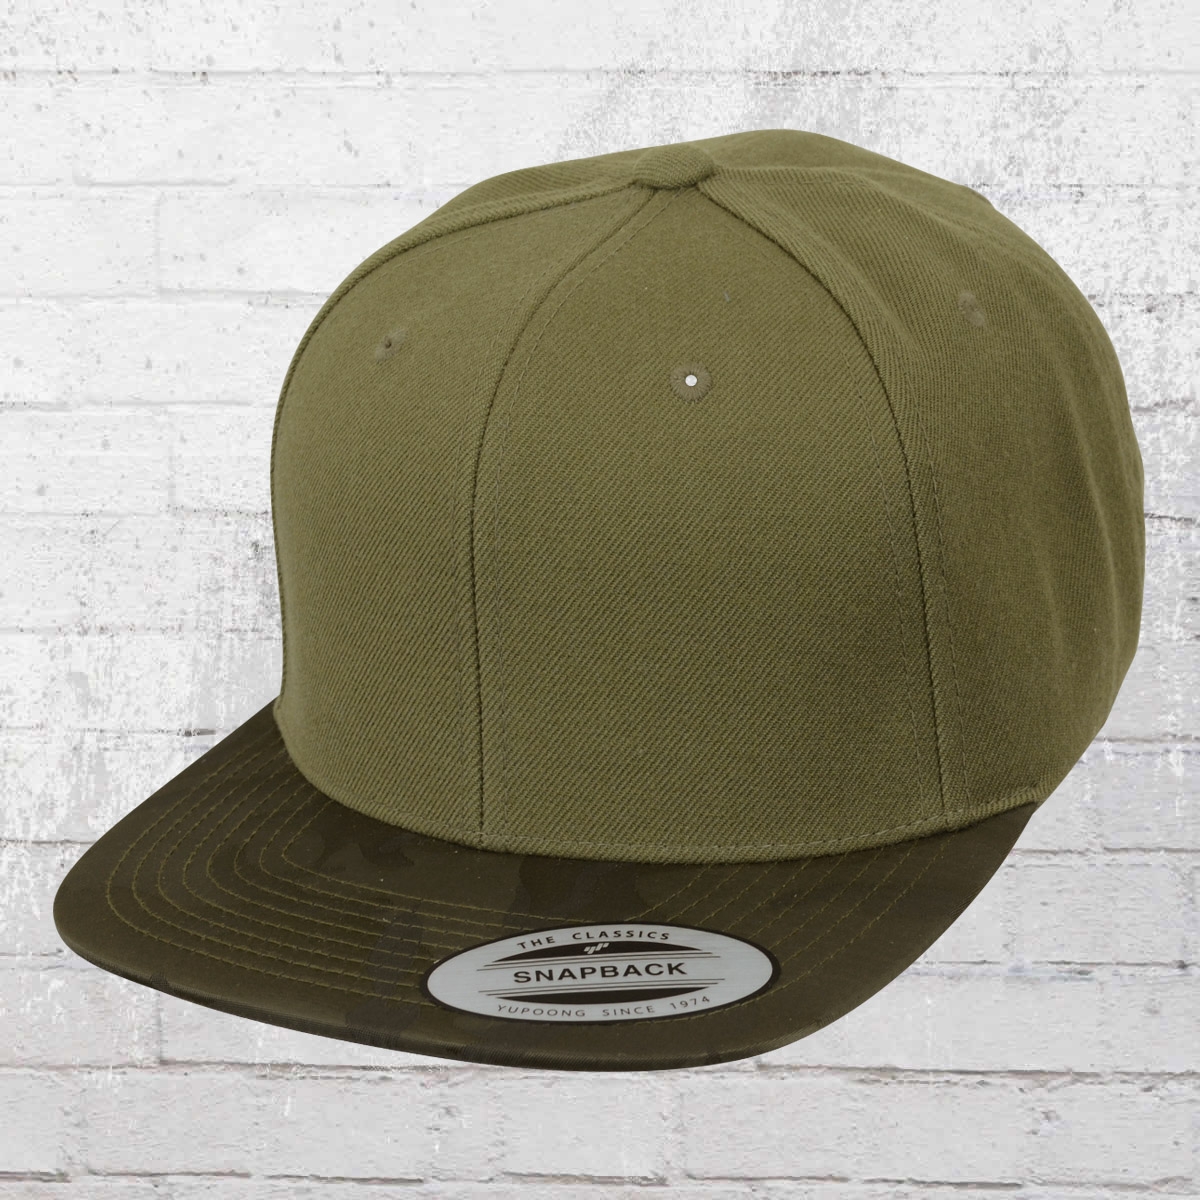 Order now | Yupoong Hat Classic Snapback Camo Visor Cap olive green